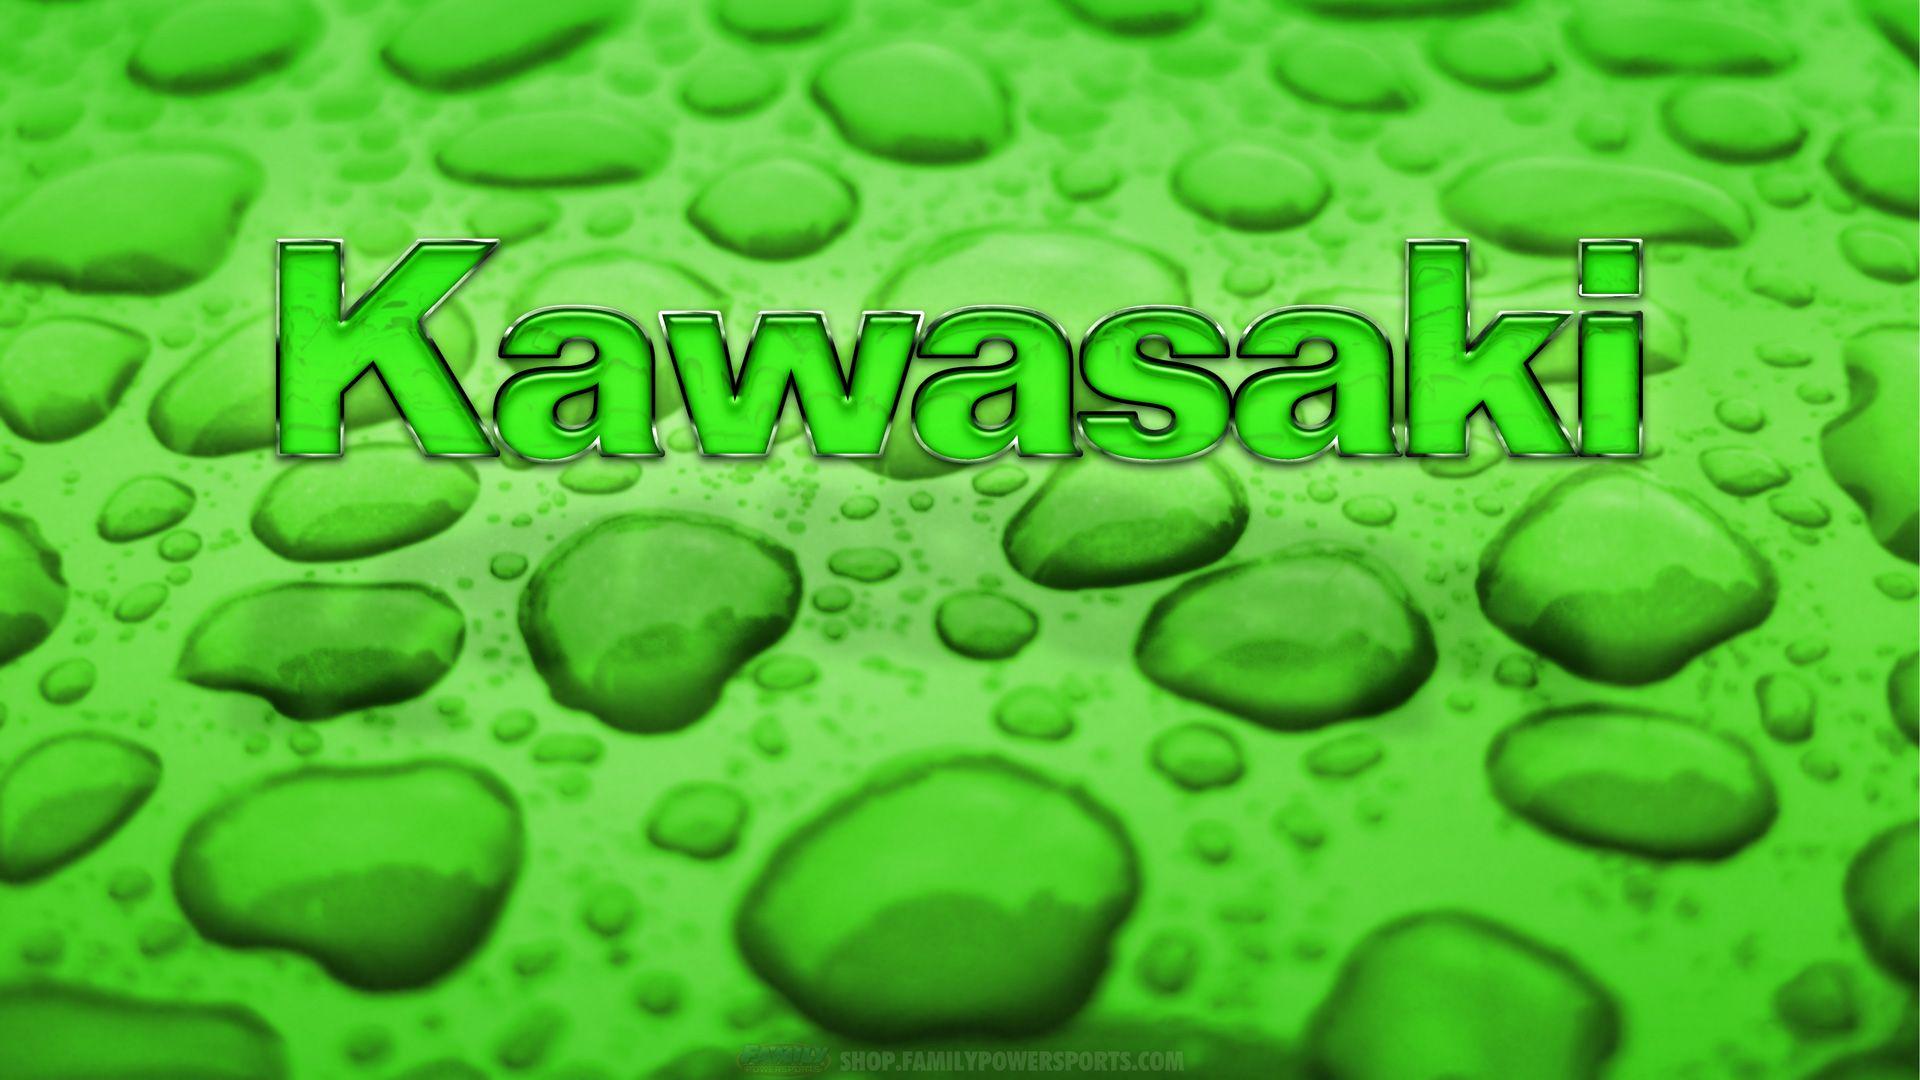 Kawasaki HD Logo Wallpaper. All CAR BIKE LOGO FREE DOWNLOAD